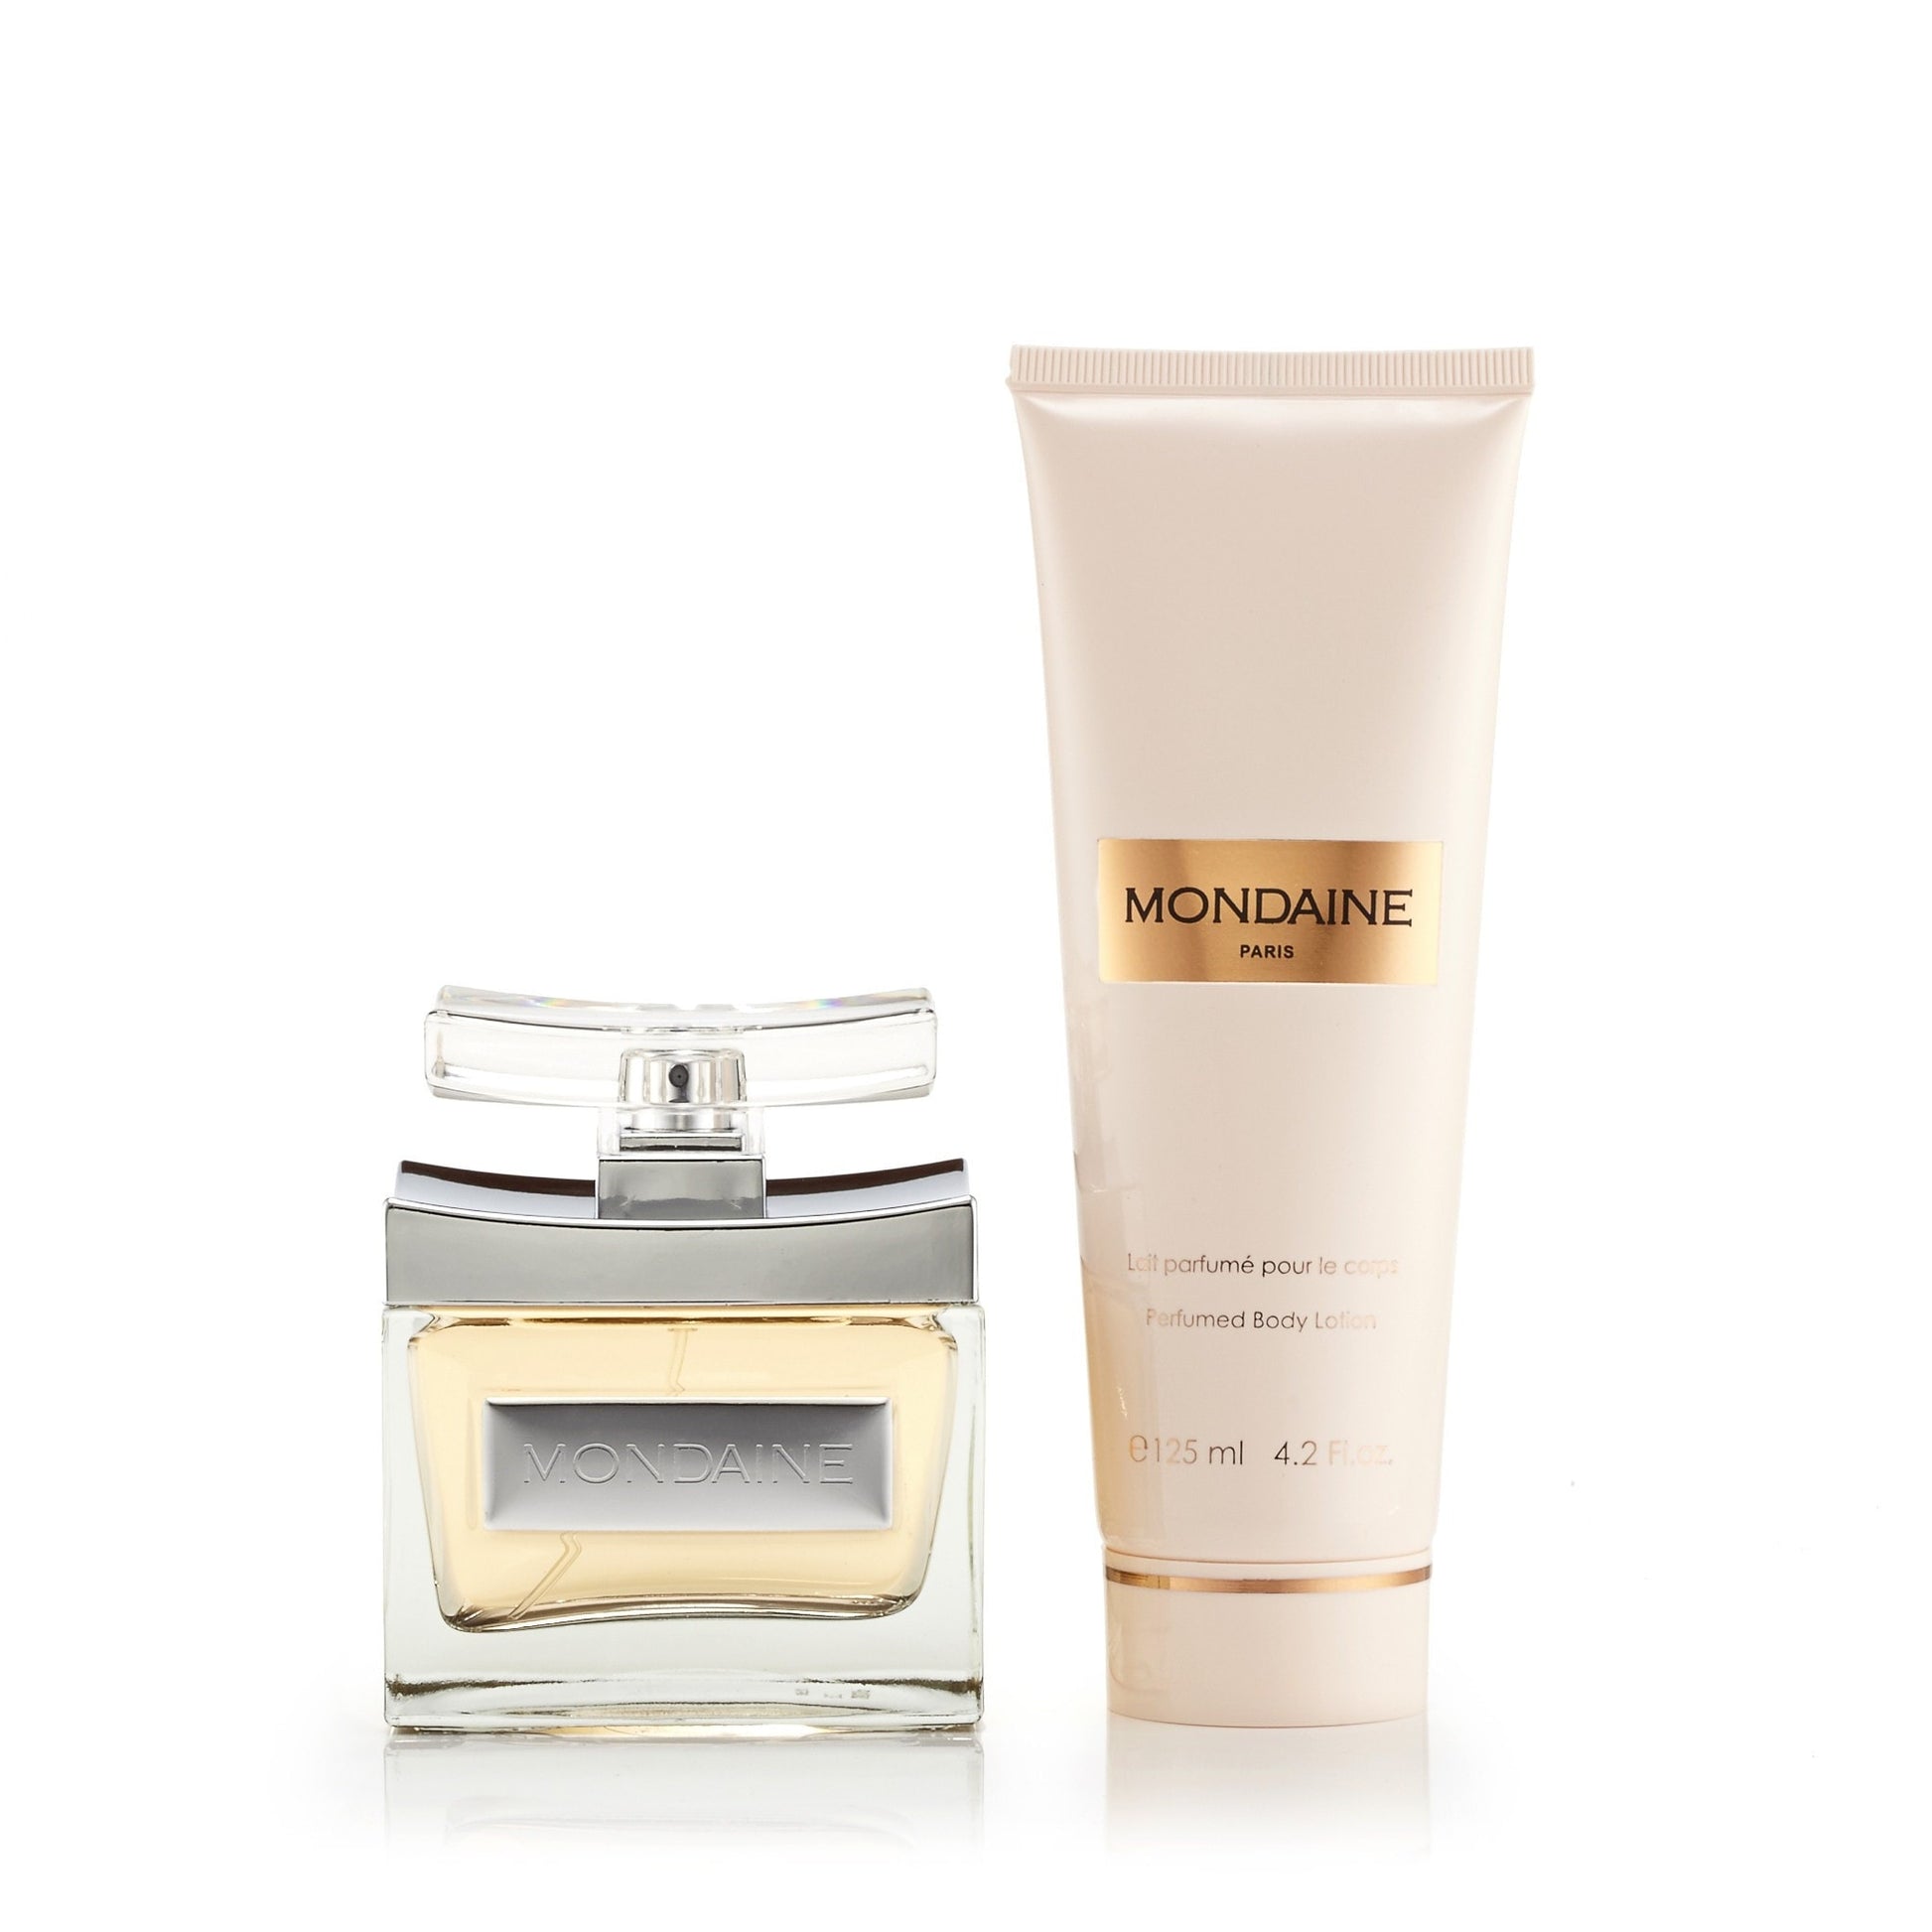 Mondaine Gift Set for Women 3.1 oz. Click to open in modal